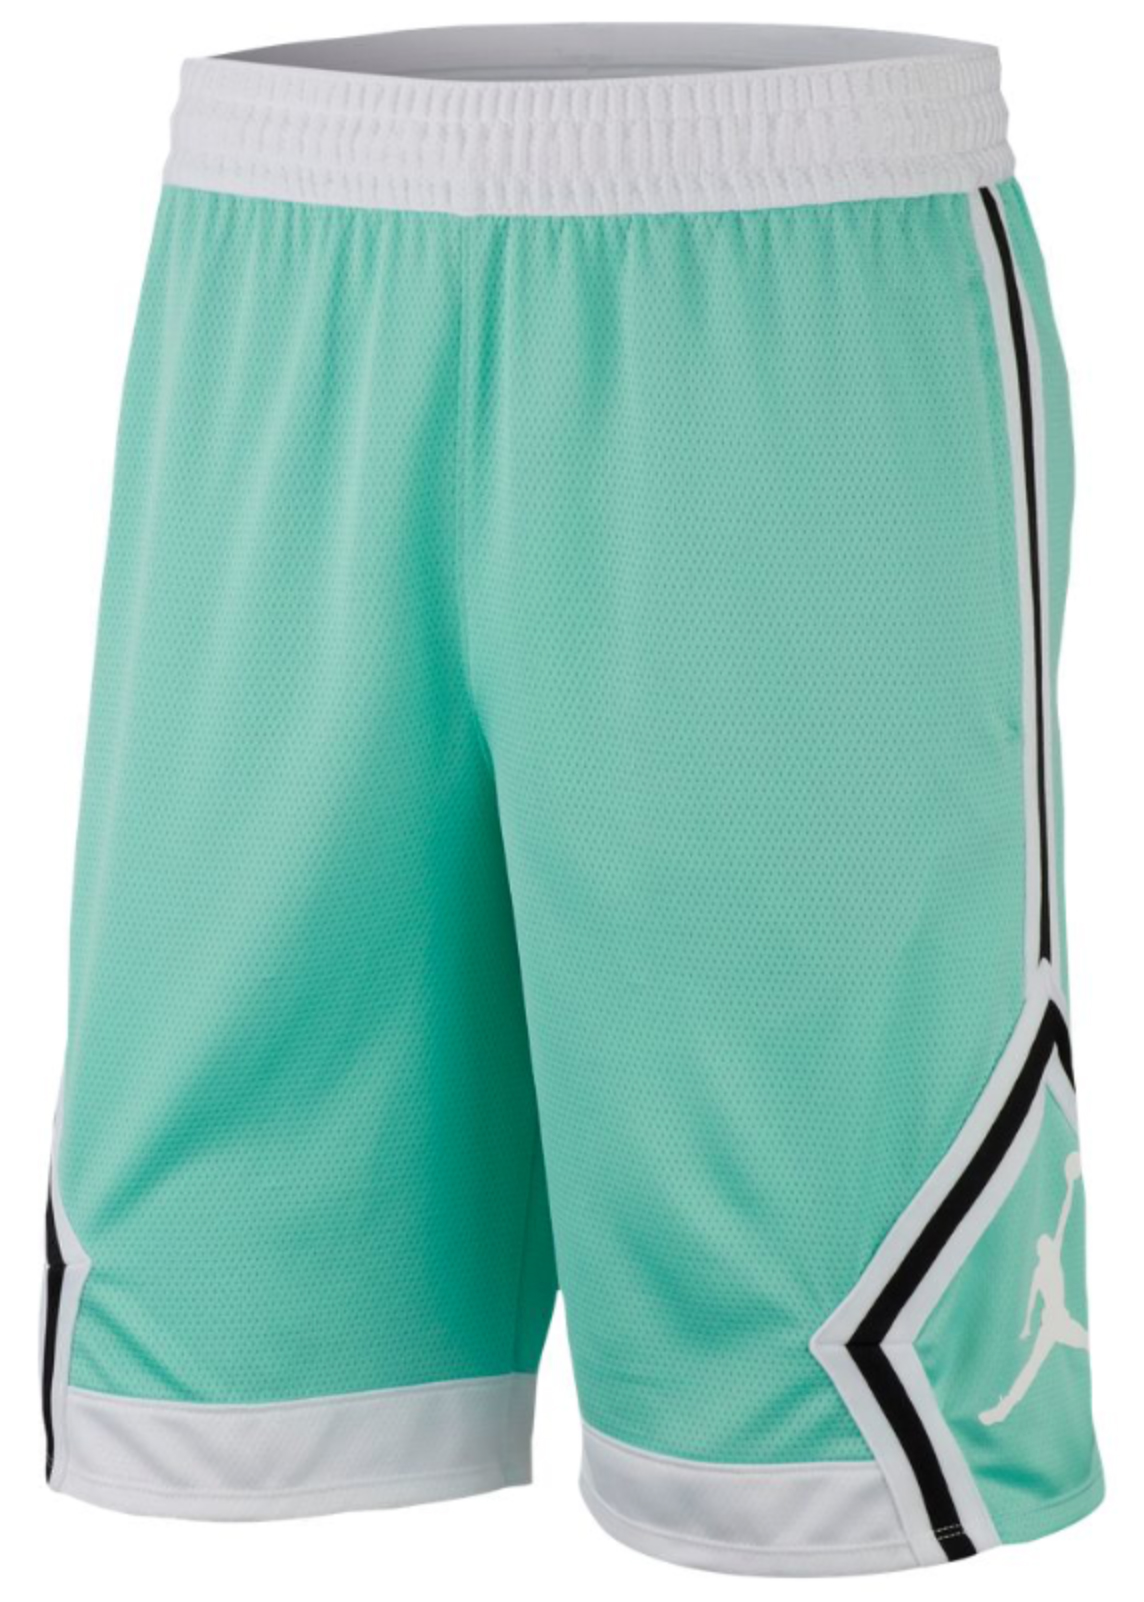 green jordan shorts